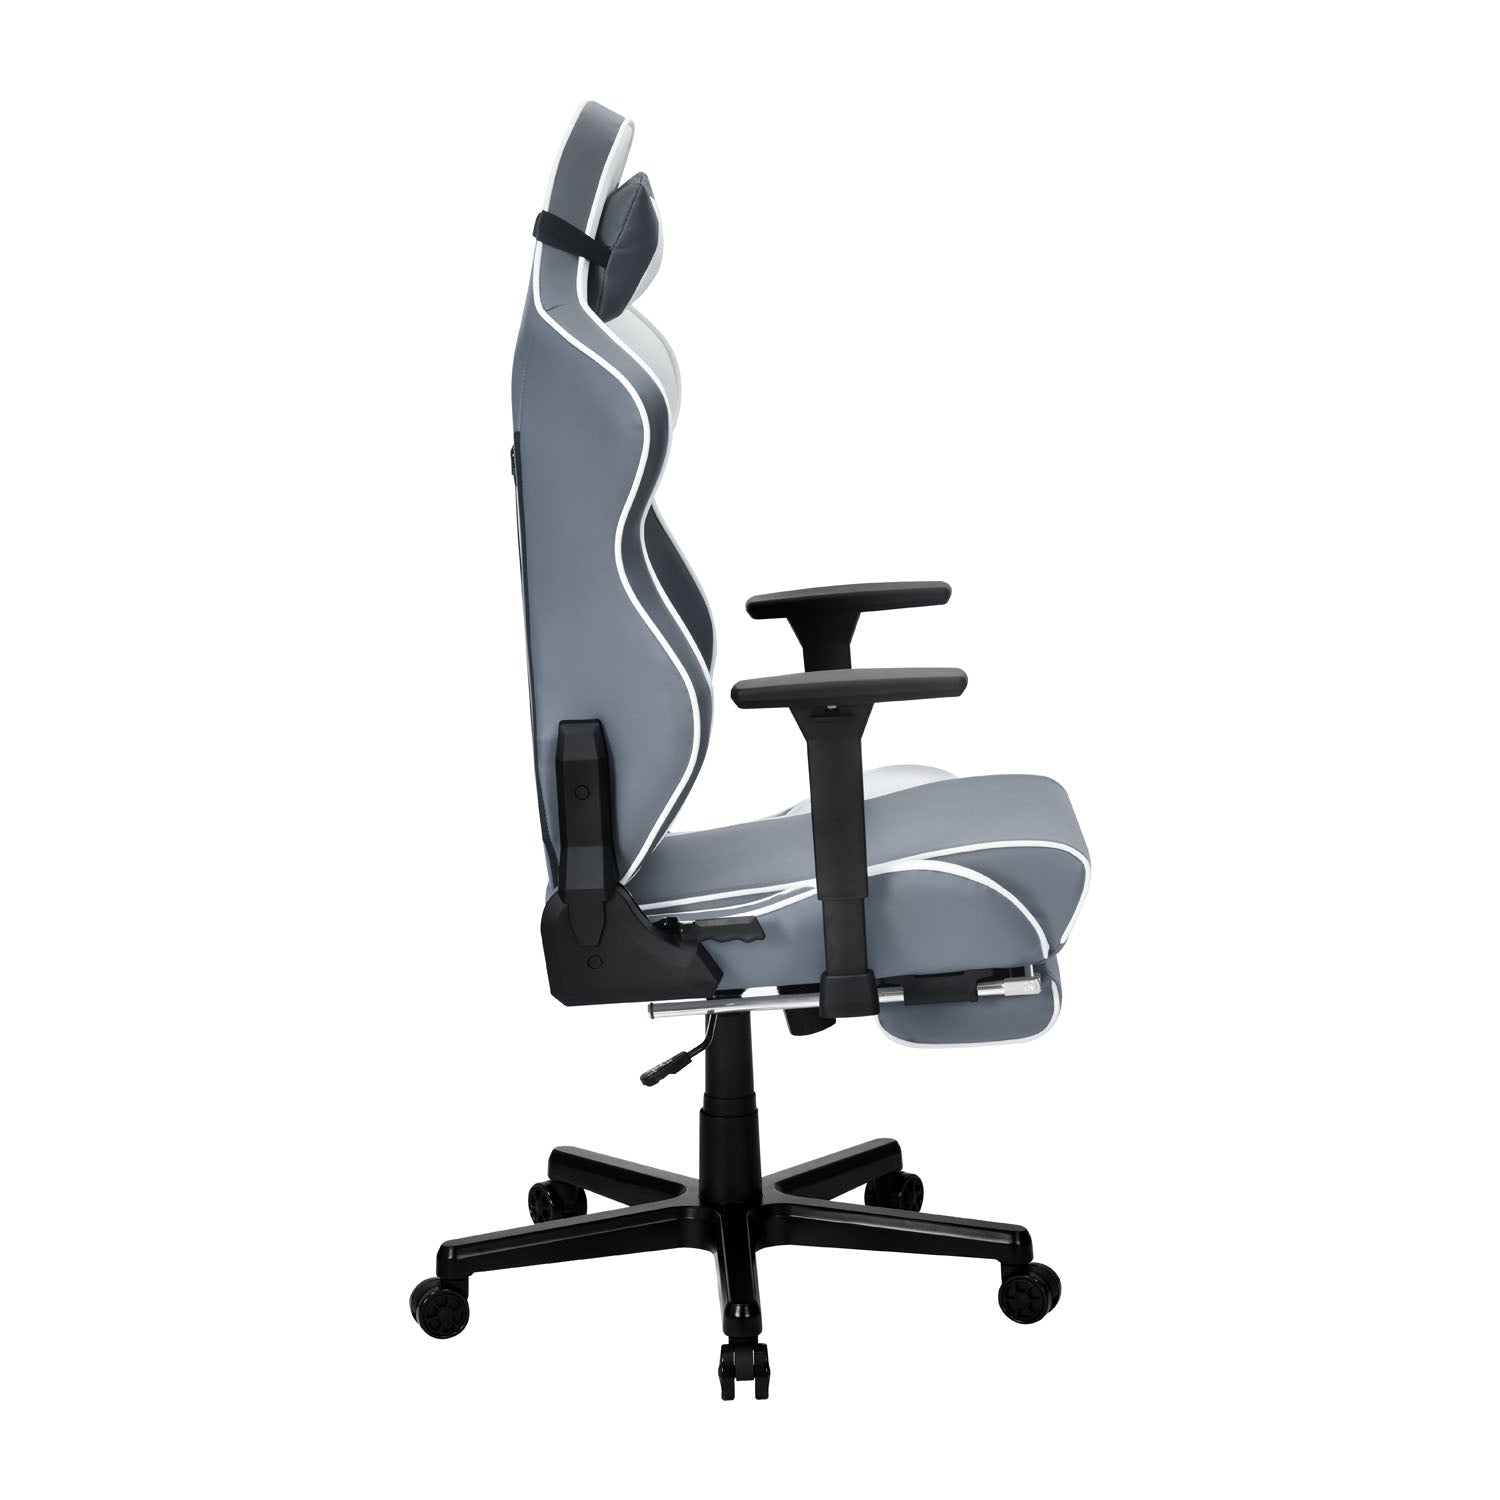 Greta Leatherette Ergonomic Gaming Chair with Neck & Lumbar Pillow (Grey & White)